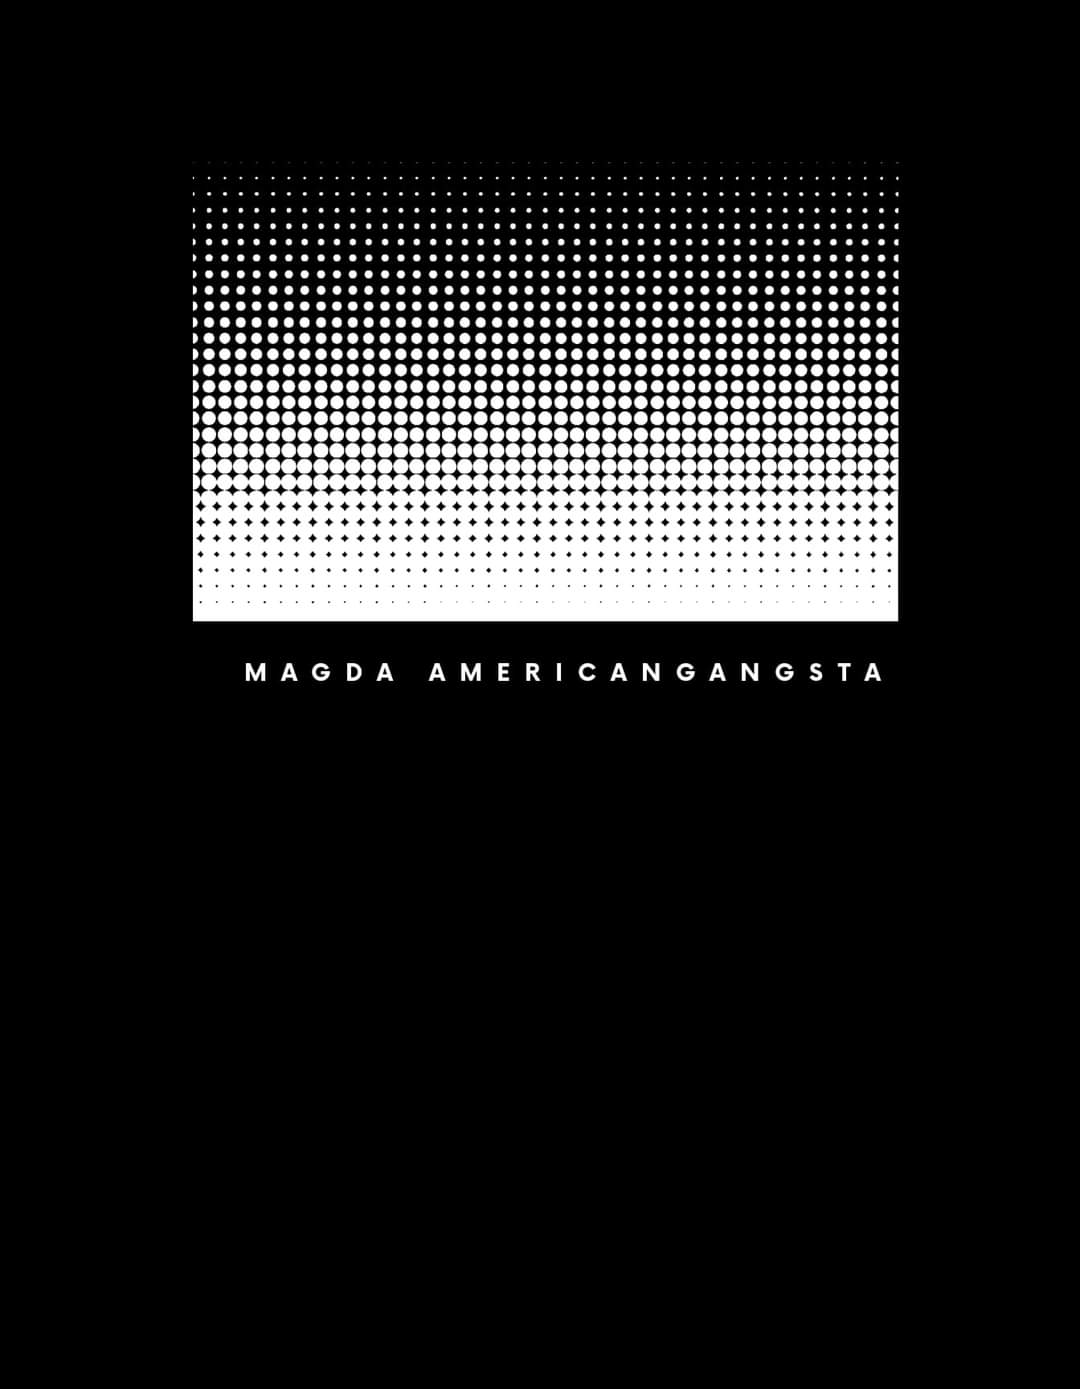 Magda_Americangangsta bannière